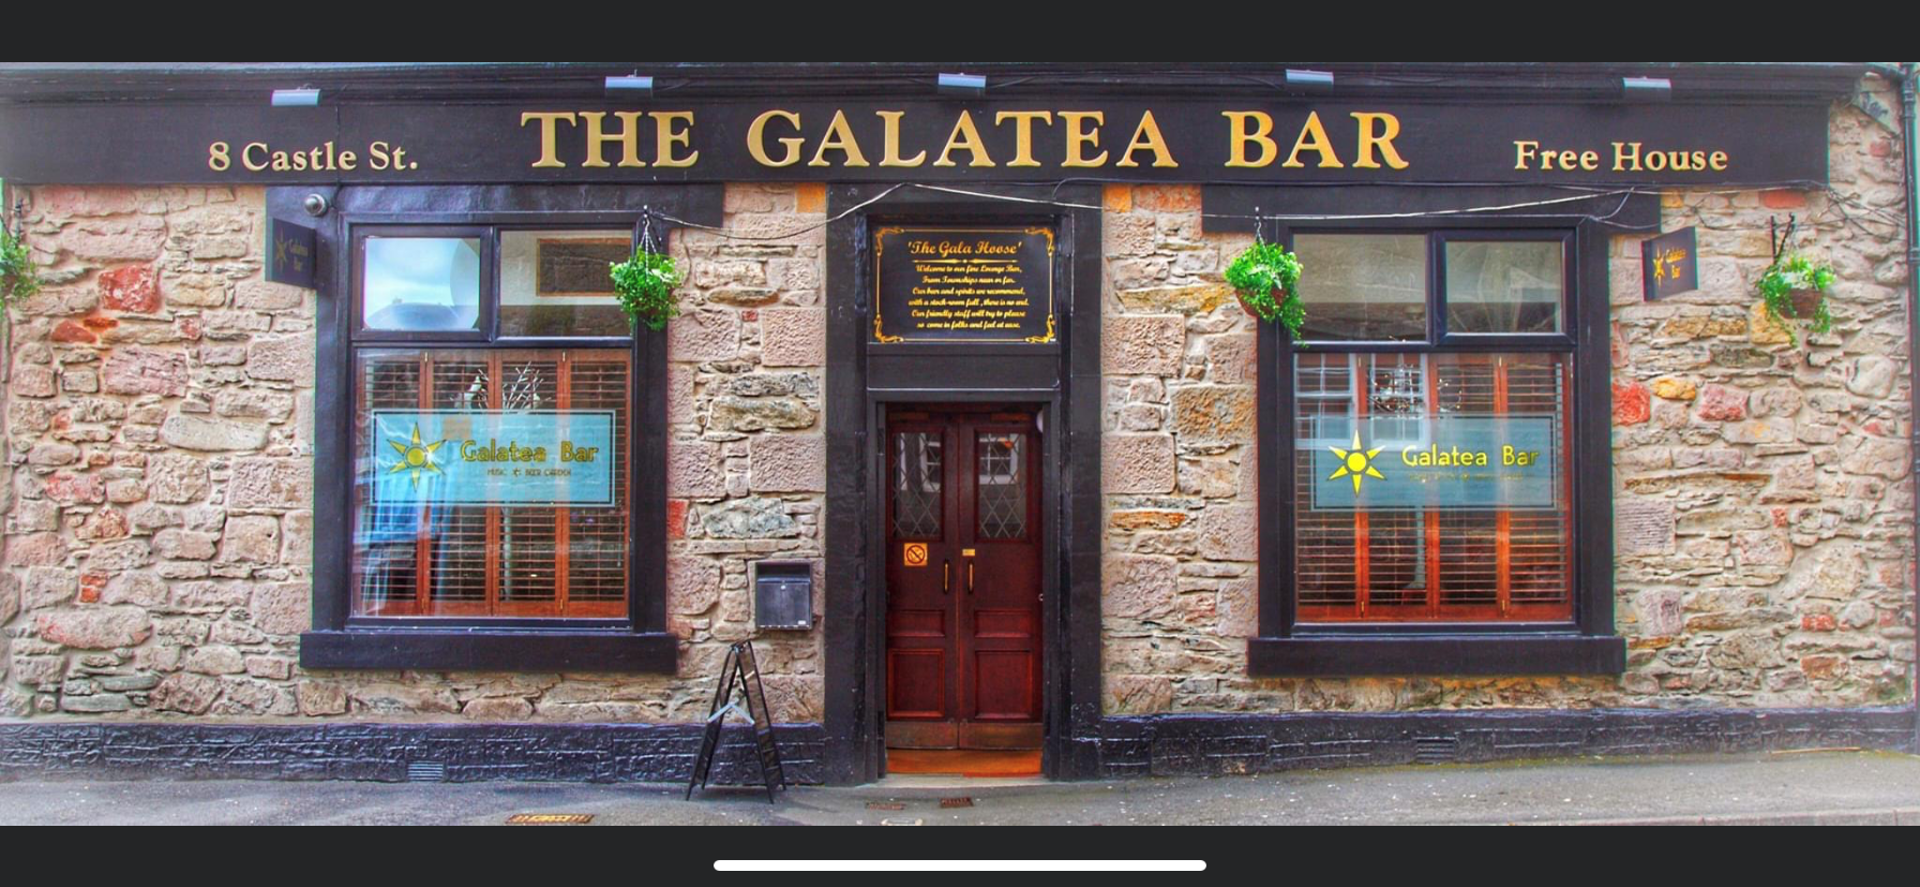 Background image - The Galatea Bar